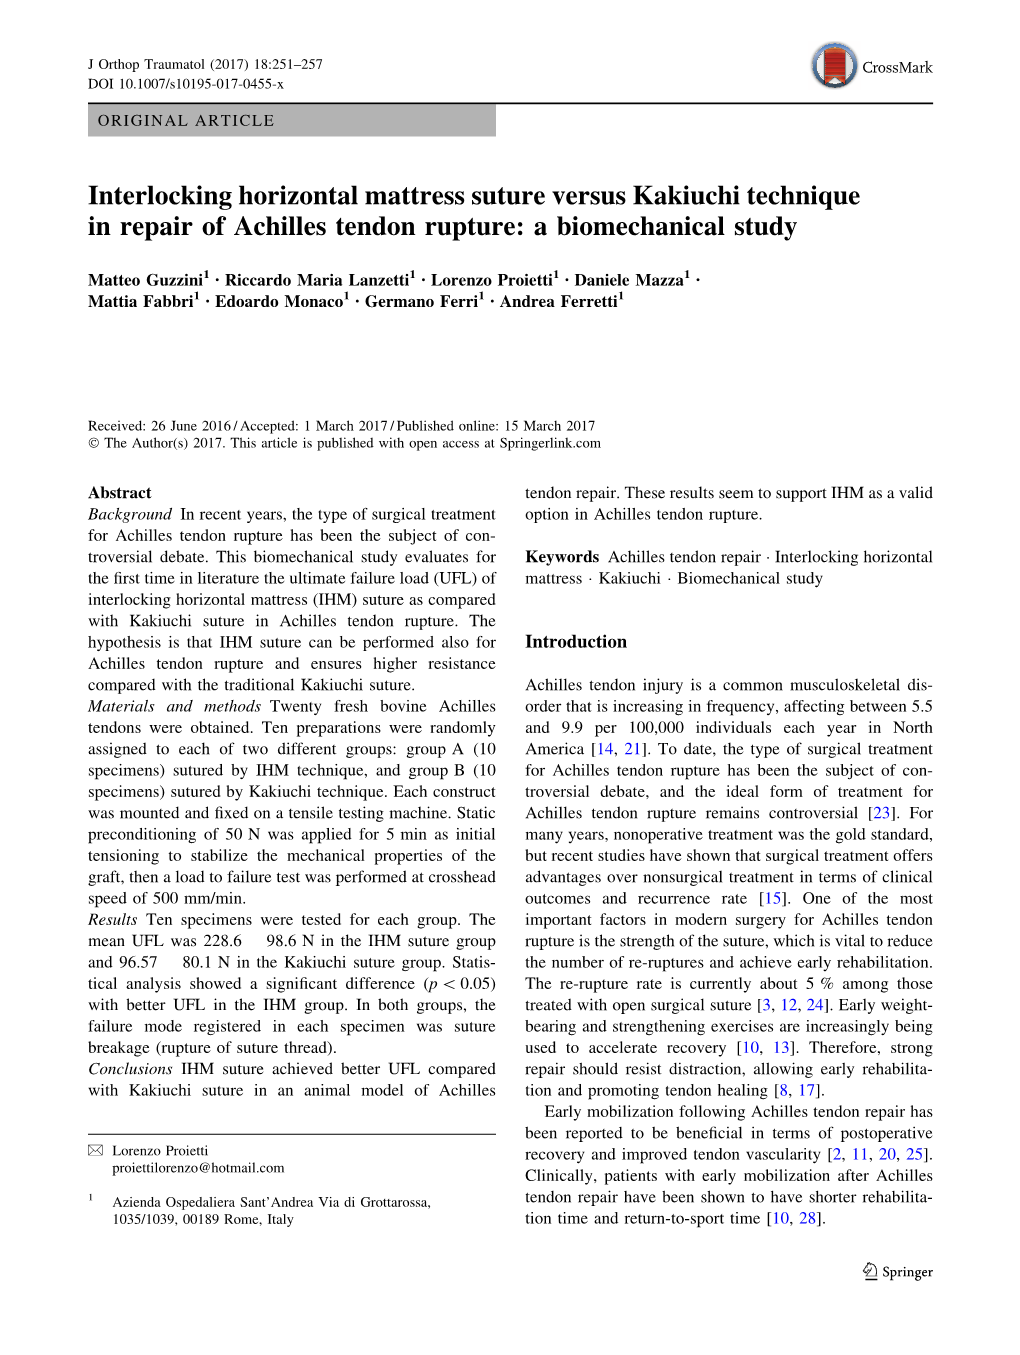 Interlocking Horizontal Mattress Suture Versus Kakiuchi Technique in Repair of Achilles Tendon Rupture: a Biomechanical Study